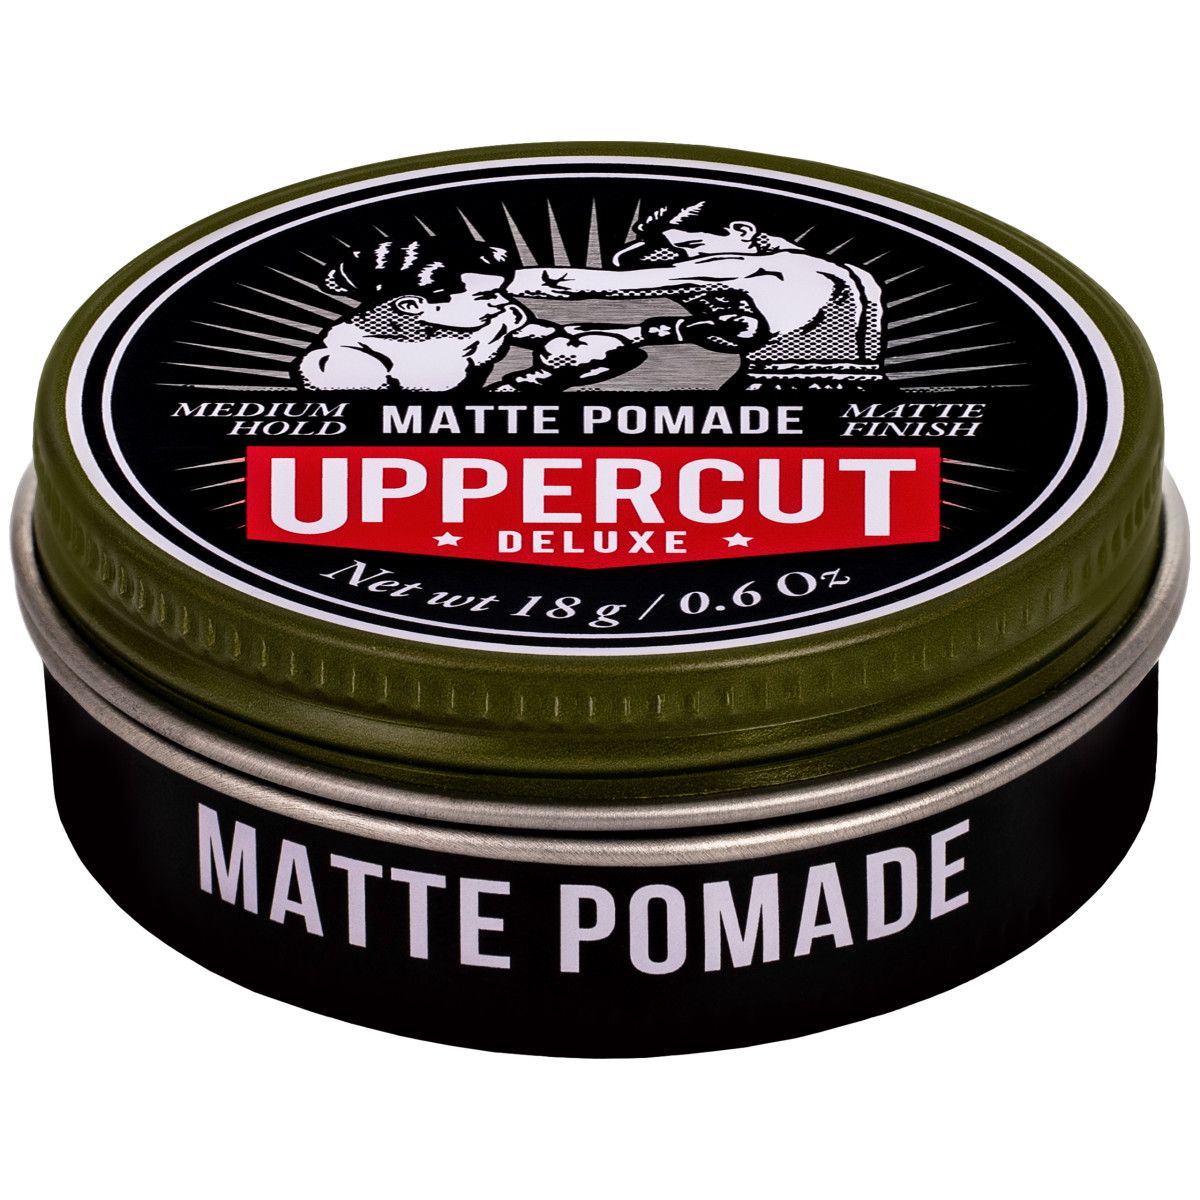 Uppercut Deluxe Matt Pomade MINI, Średnio utrwalająca matowa 18g